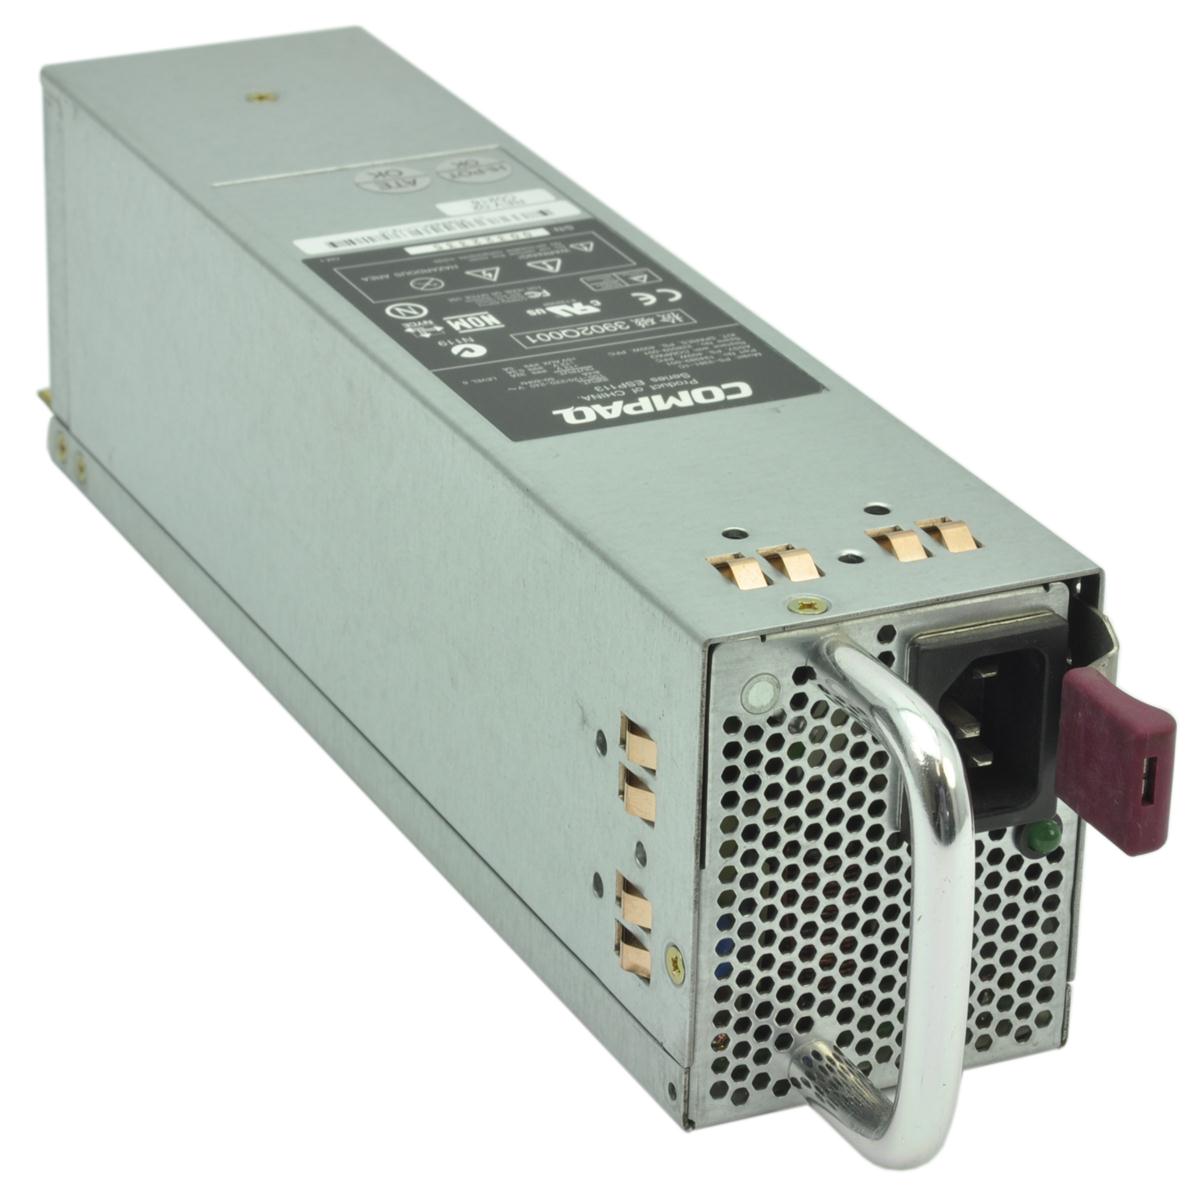 313299-001N HP 400-Watts 100-240V AC Redundant Hot Swap Power Supply with PFC for ProLiant DL380 G2/ G3 Server